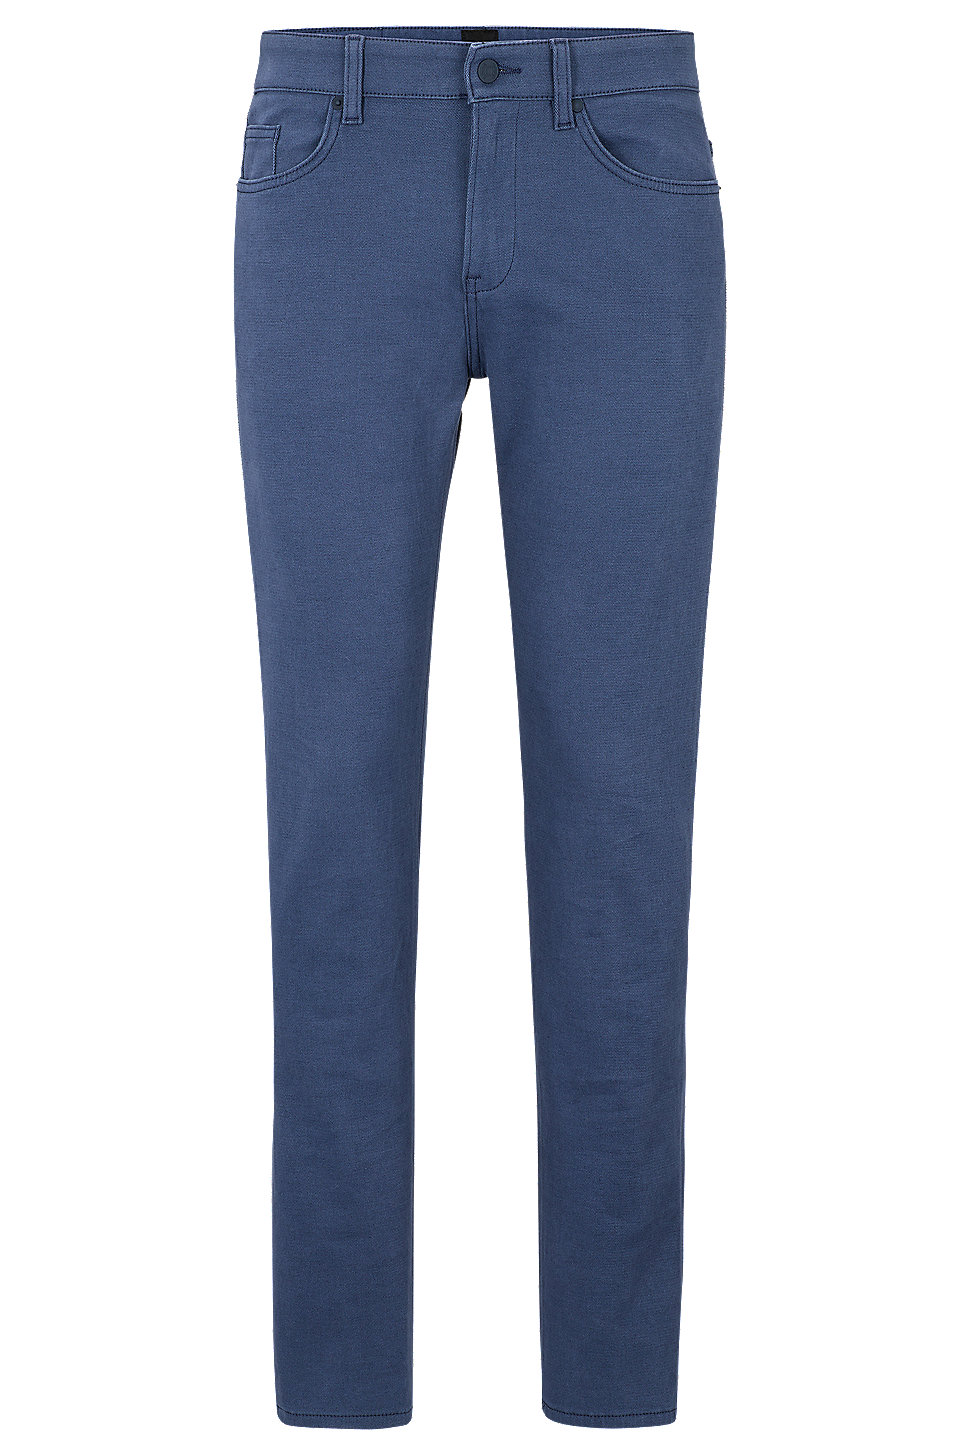 BOSS - Slim-fit regular-rise jeans in structured denim